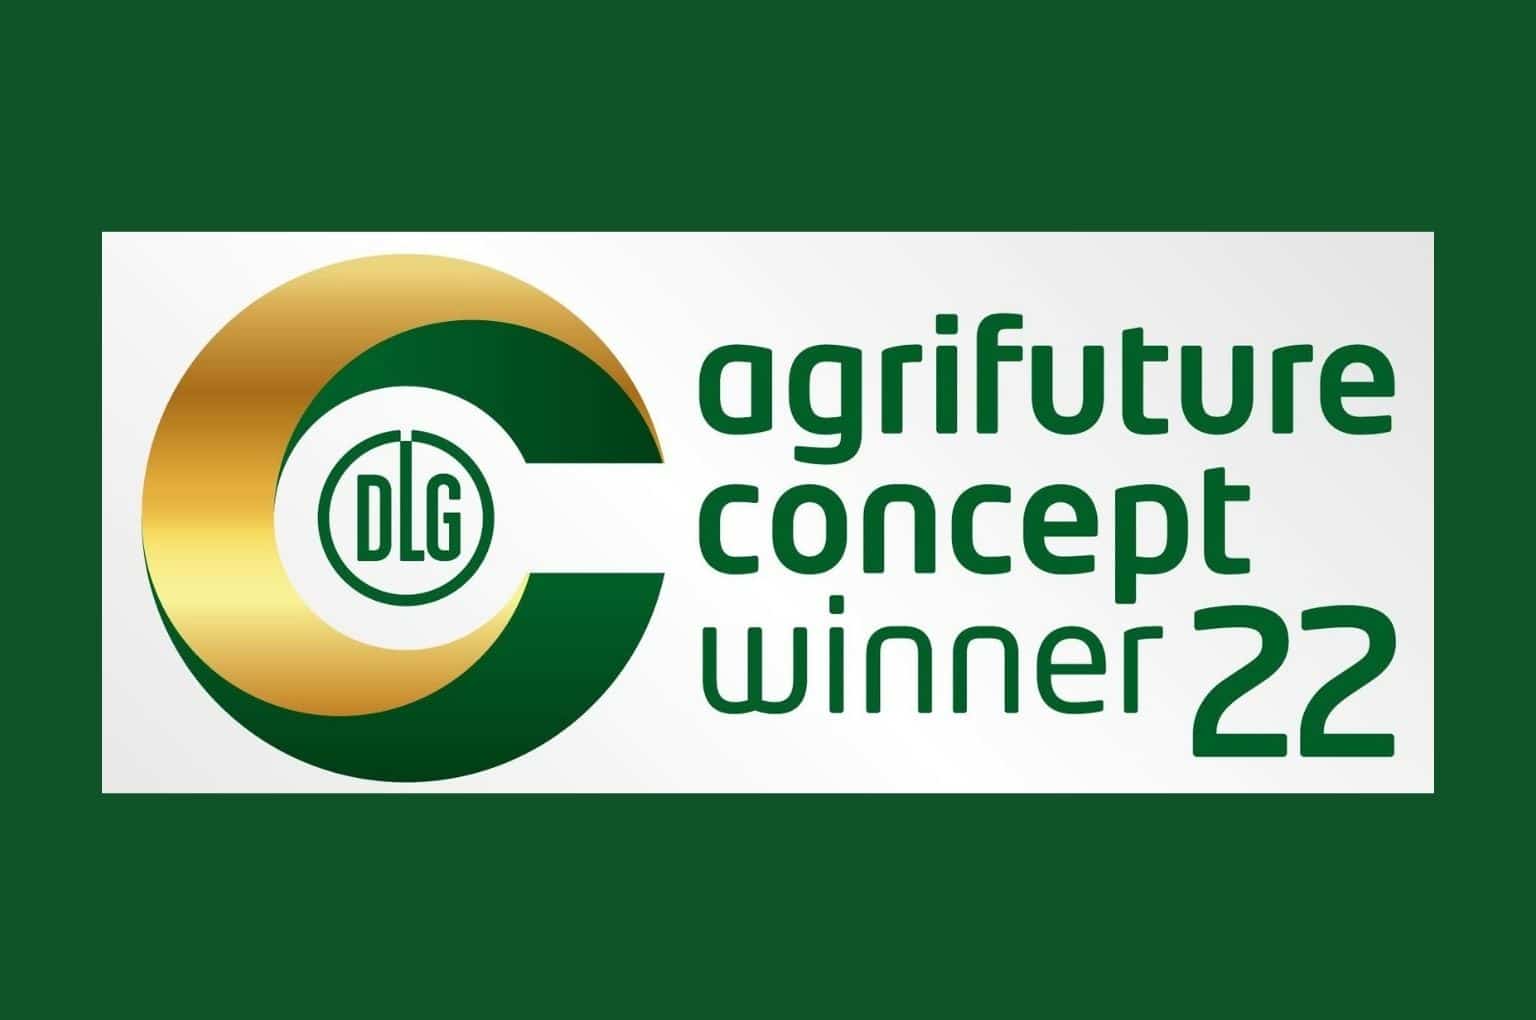 DLG Agrifuture Concept